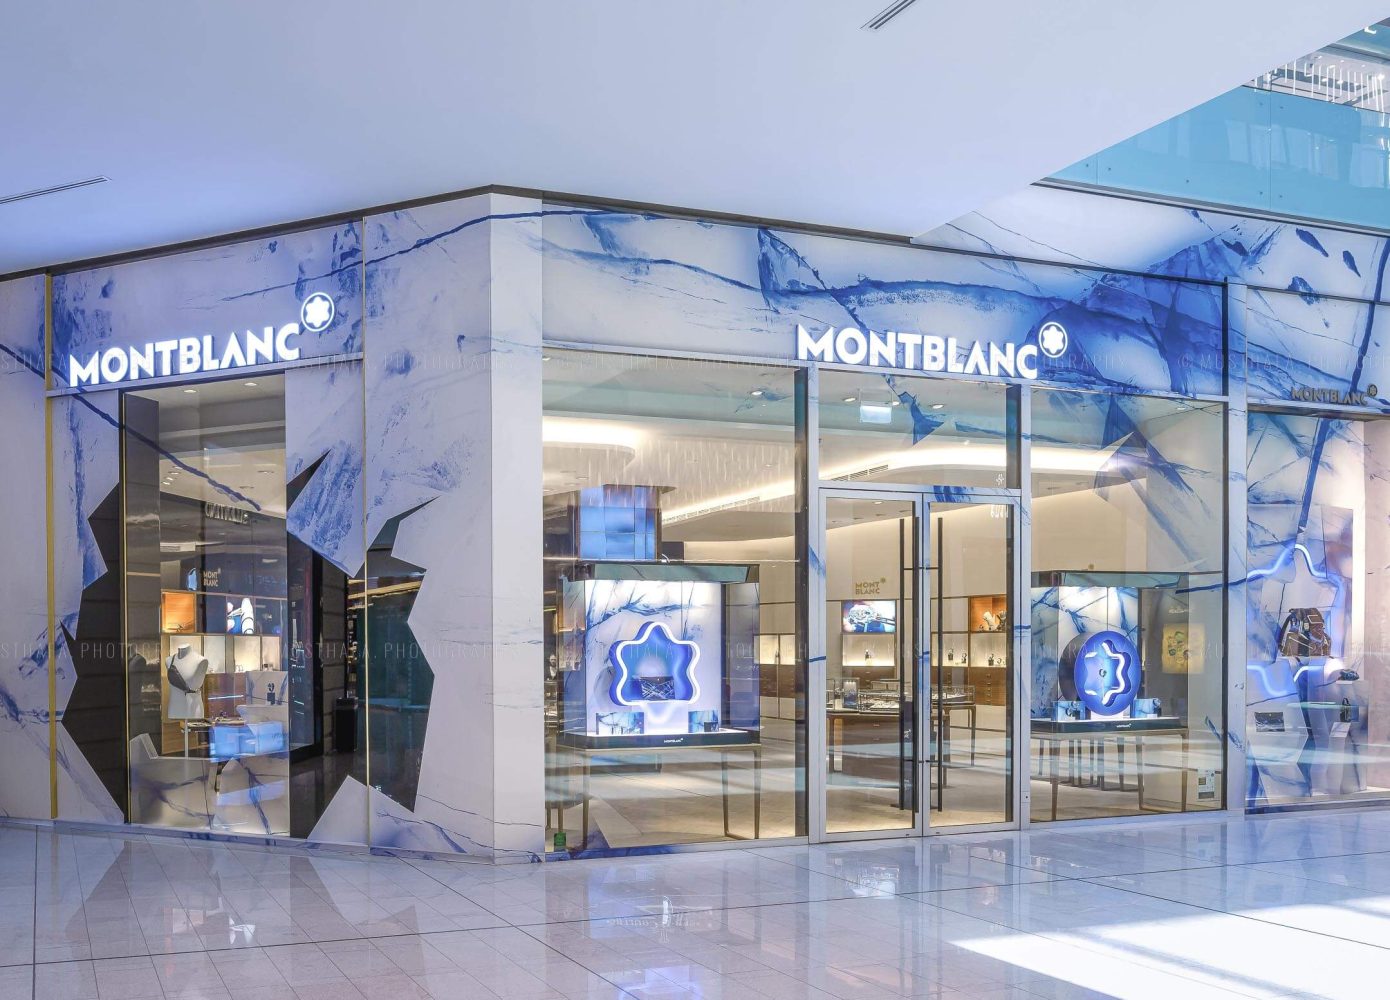 Montblanc Dubai Mall Store Retail Interior Photographer Luxury Brands Professional Freelance Abu Dhabi UAE Kuwait KSA Riyadh 01